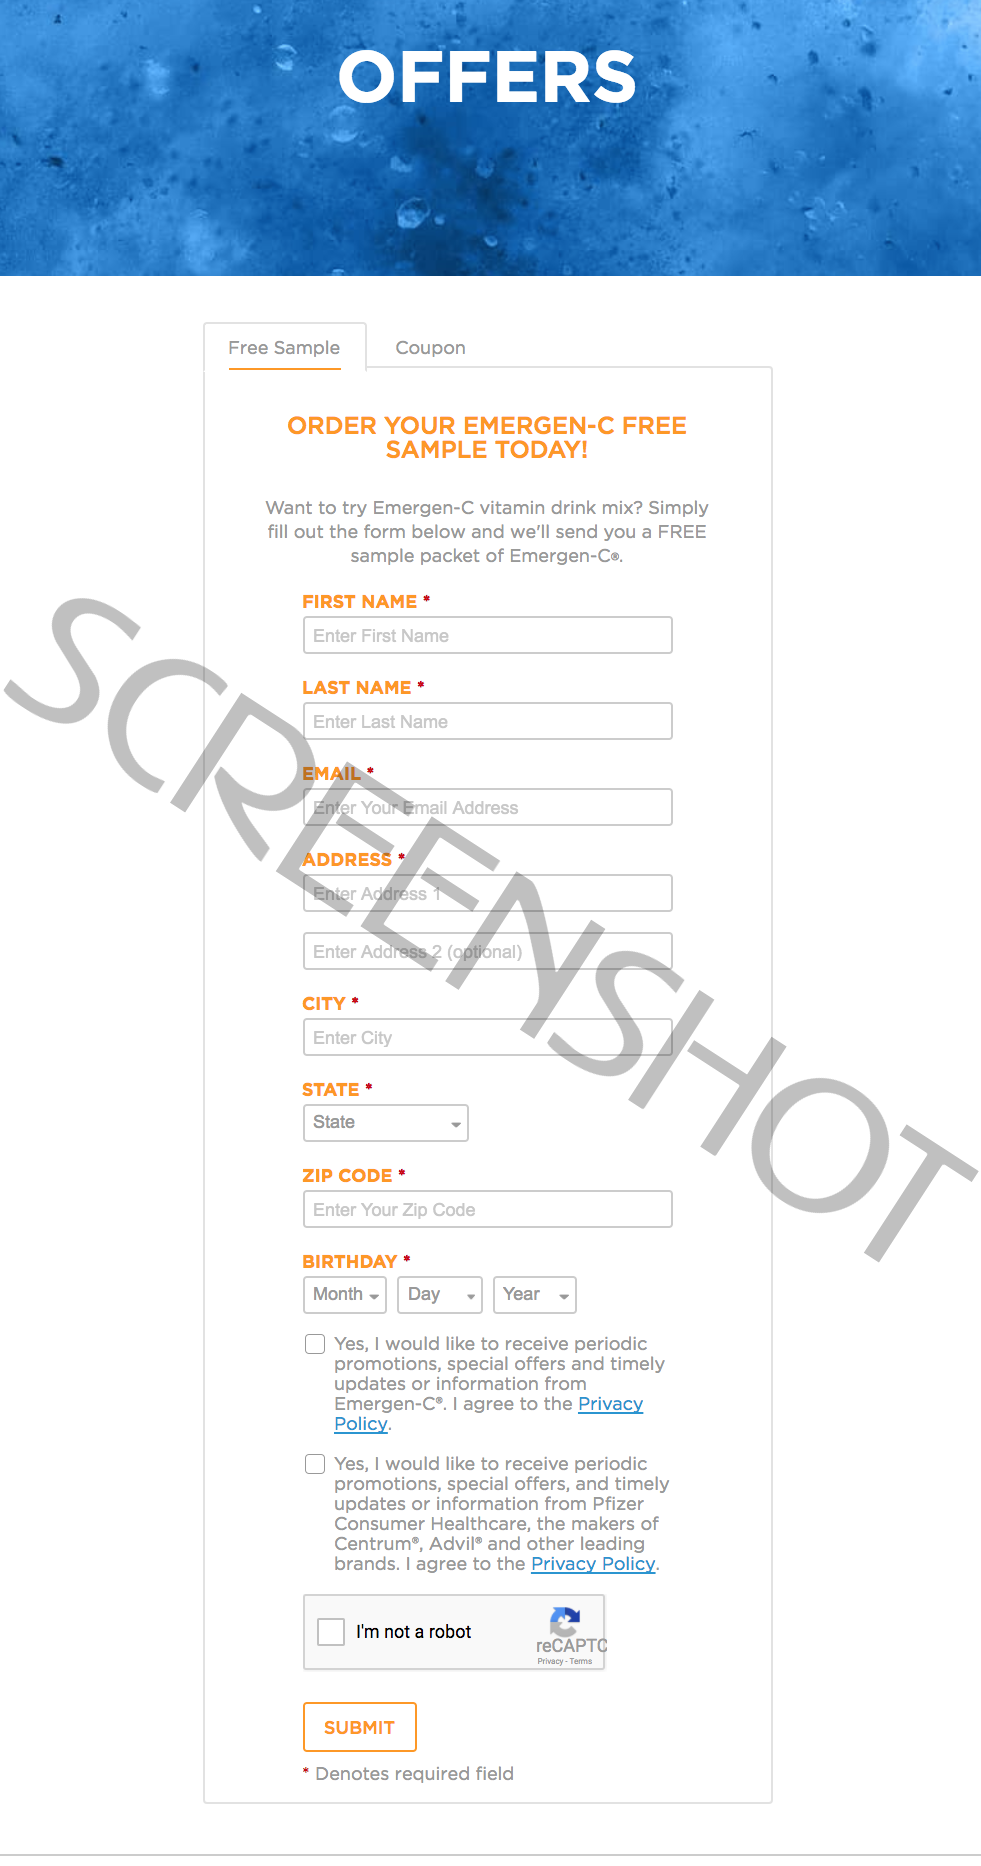 FREE Sample Offer Page Screenshot